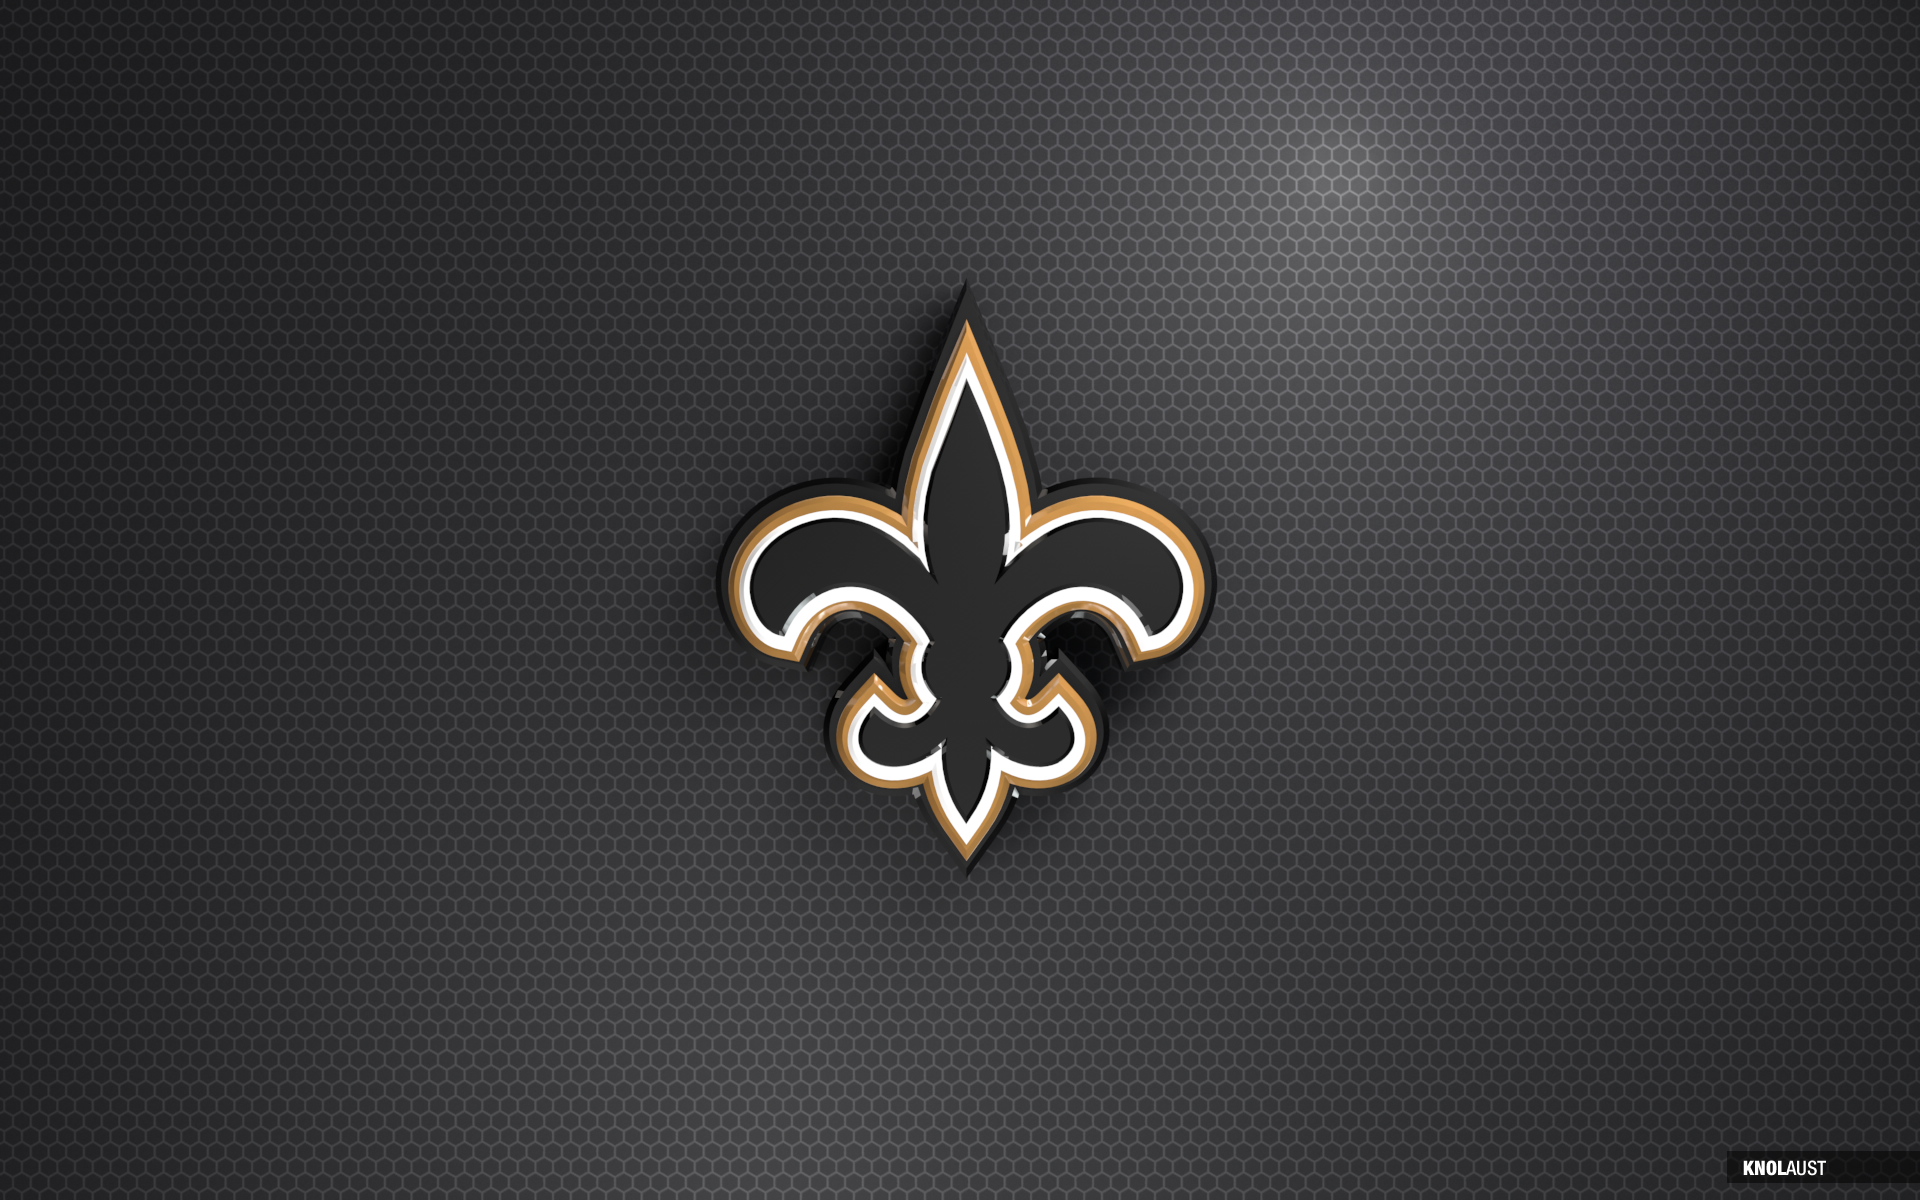 New Orleans Saints Background Image Wallpaper